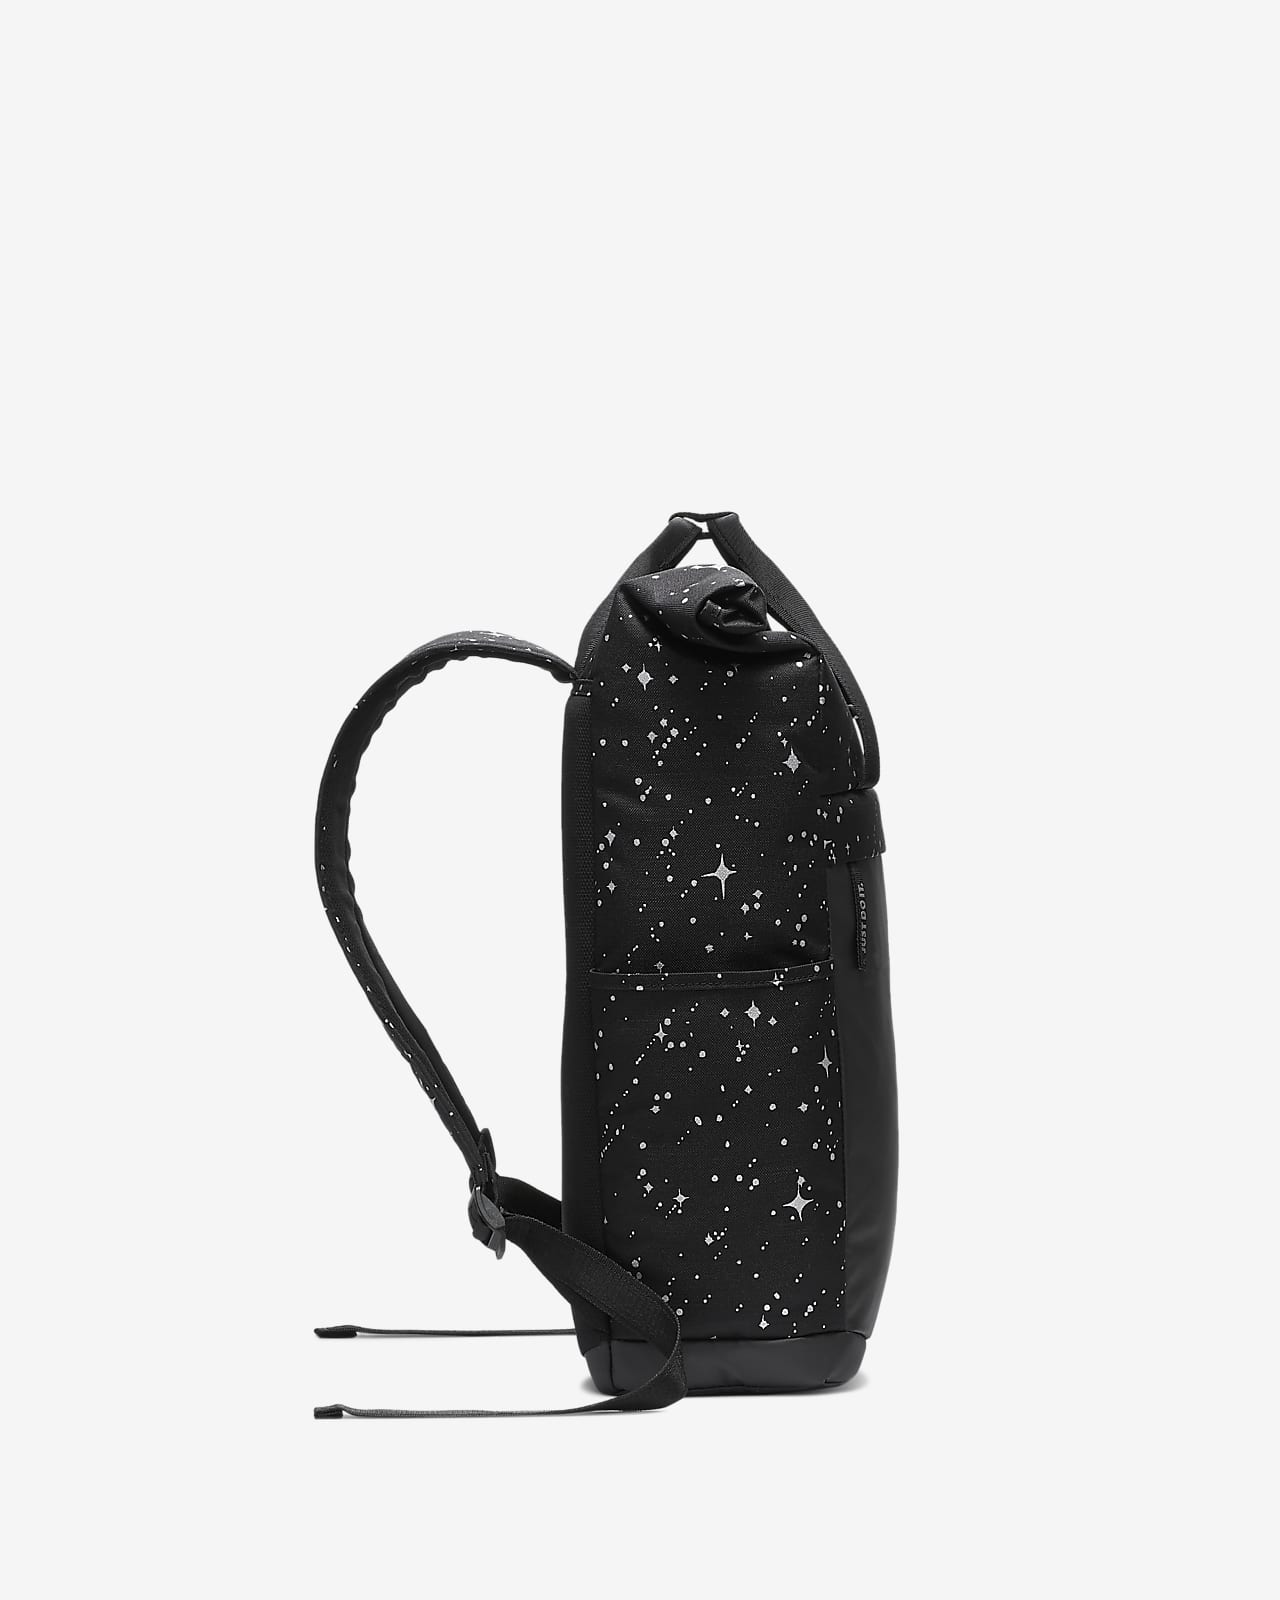 nike training backpack in black sparkle print